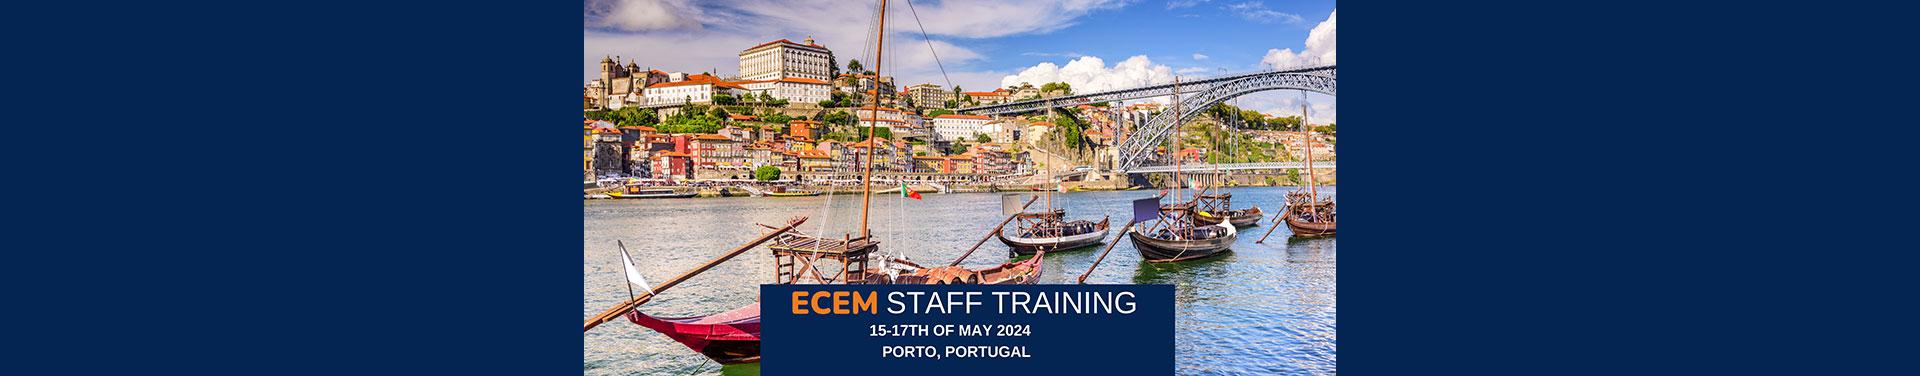 ECEM Staff Training